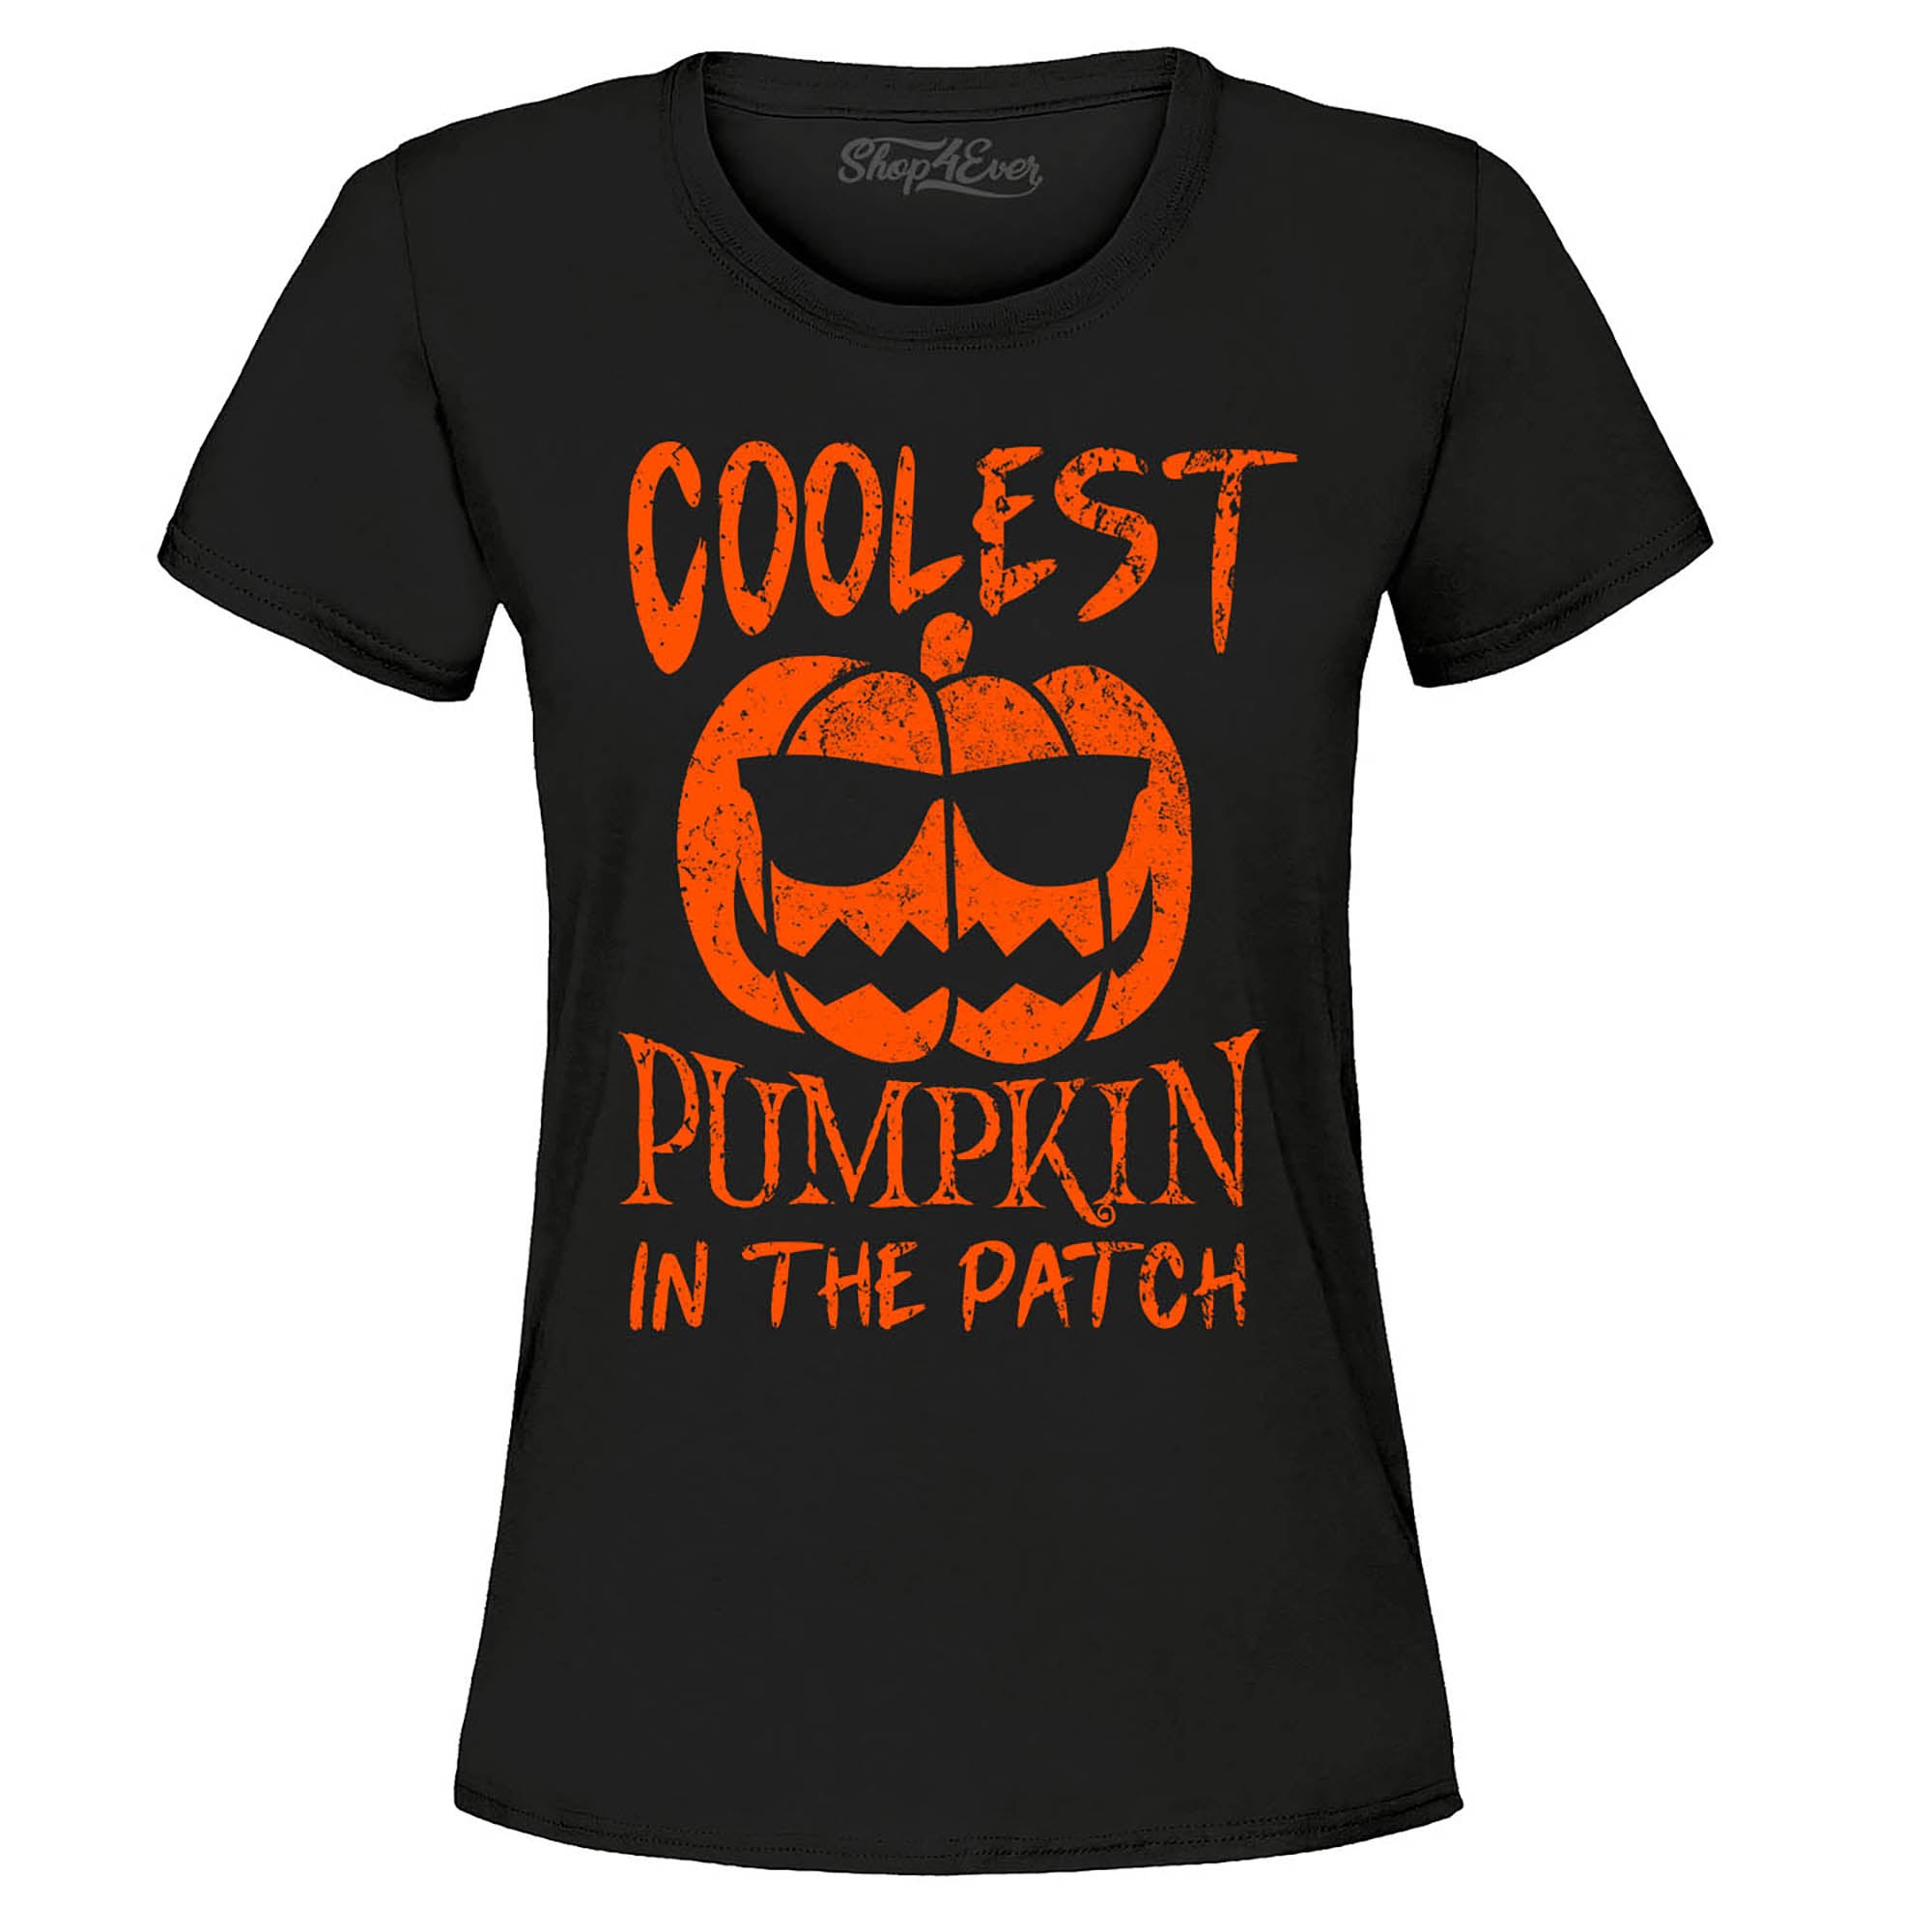 oolest Pumpkin in The Patch Women's T-Shirt